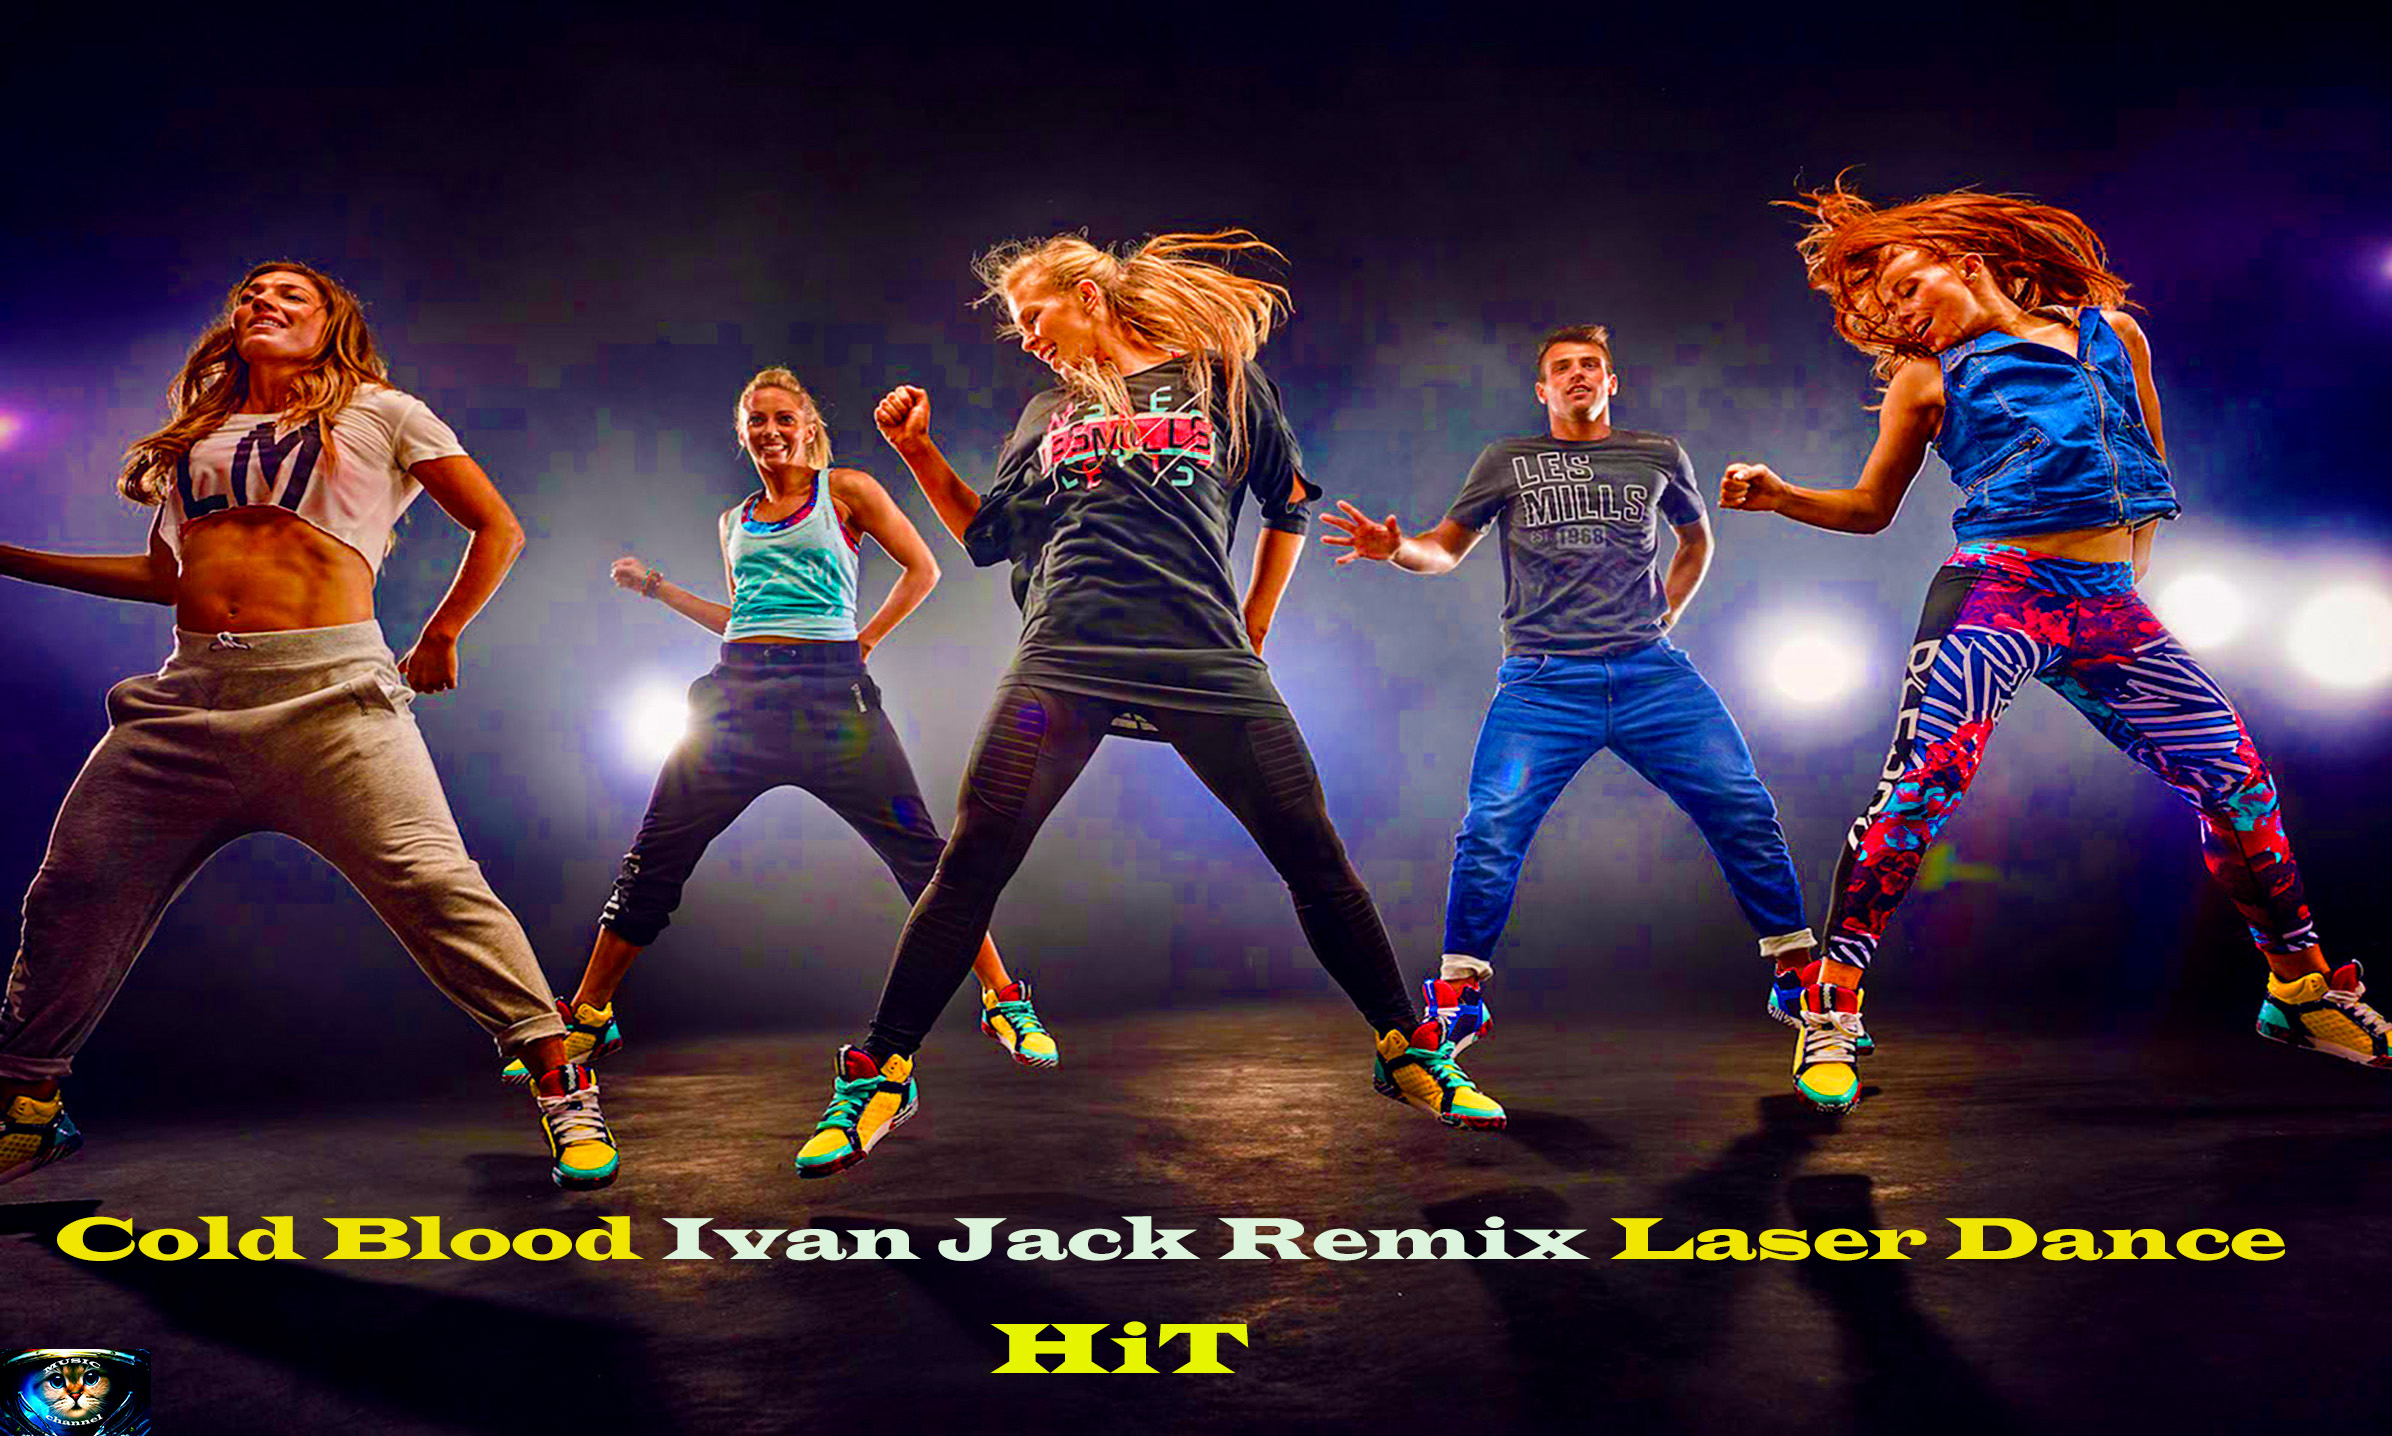 Cold Blood Ivan Jack Remix Laser Dance,Deep House,Nu Disco,Progressive,Дип Хаус,Ню Диско, #22 .mp4